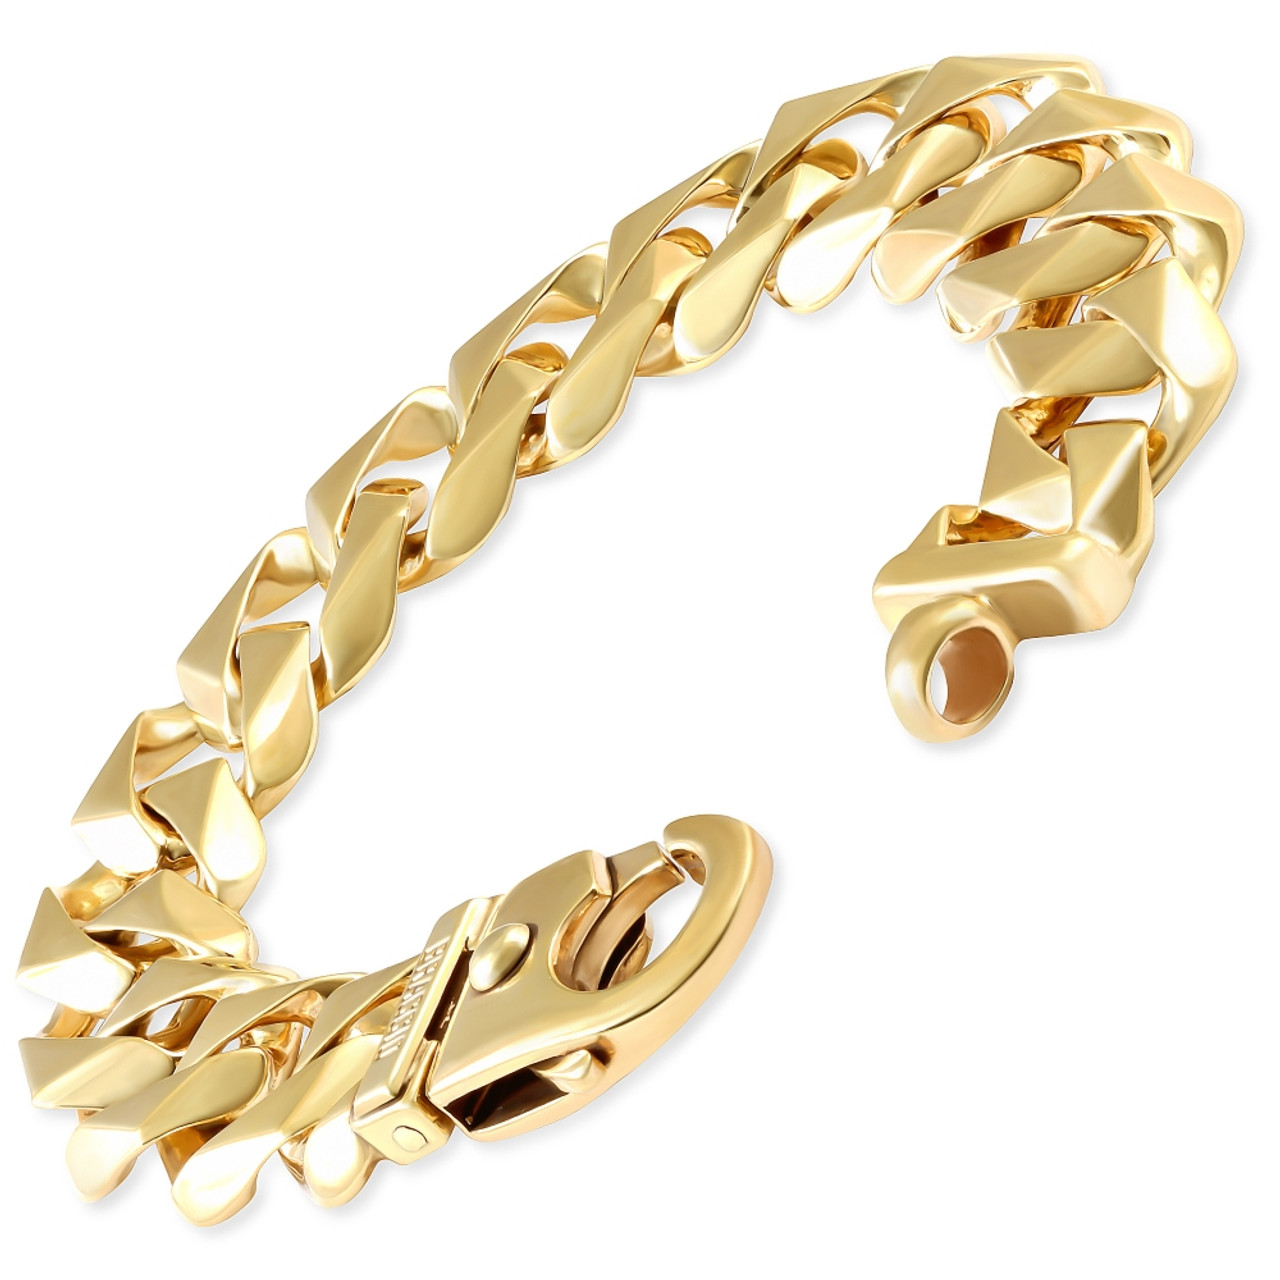 8 gram gold bracelet designs for womens OFF 60% |Newest